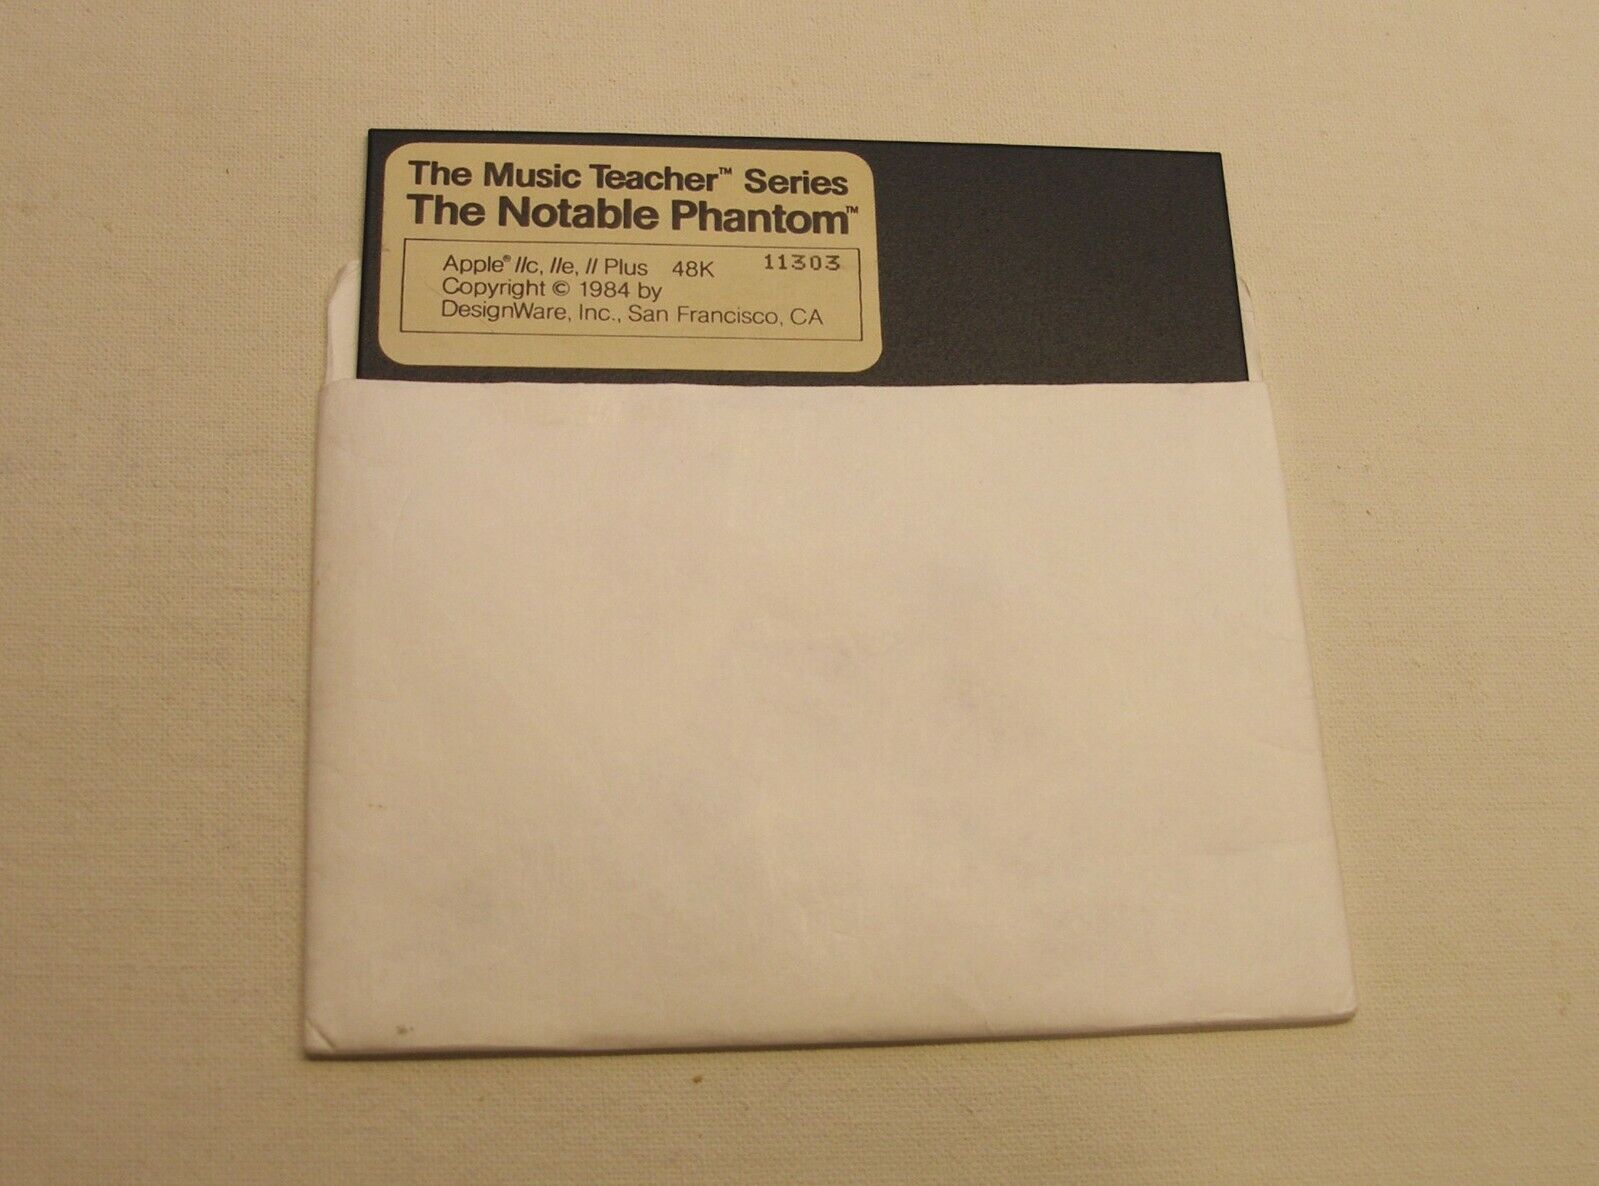 RARE Notable Phantom Disk for Apple II+, Apple IIe, Apple IIc, Apple IIGS